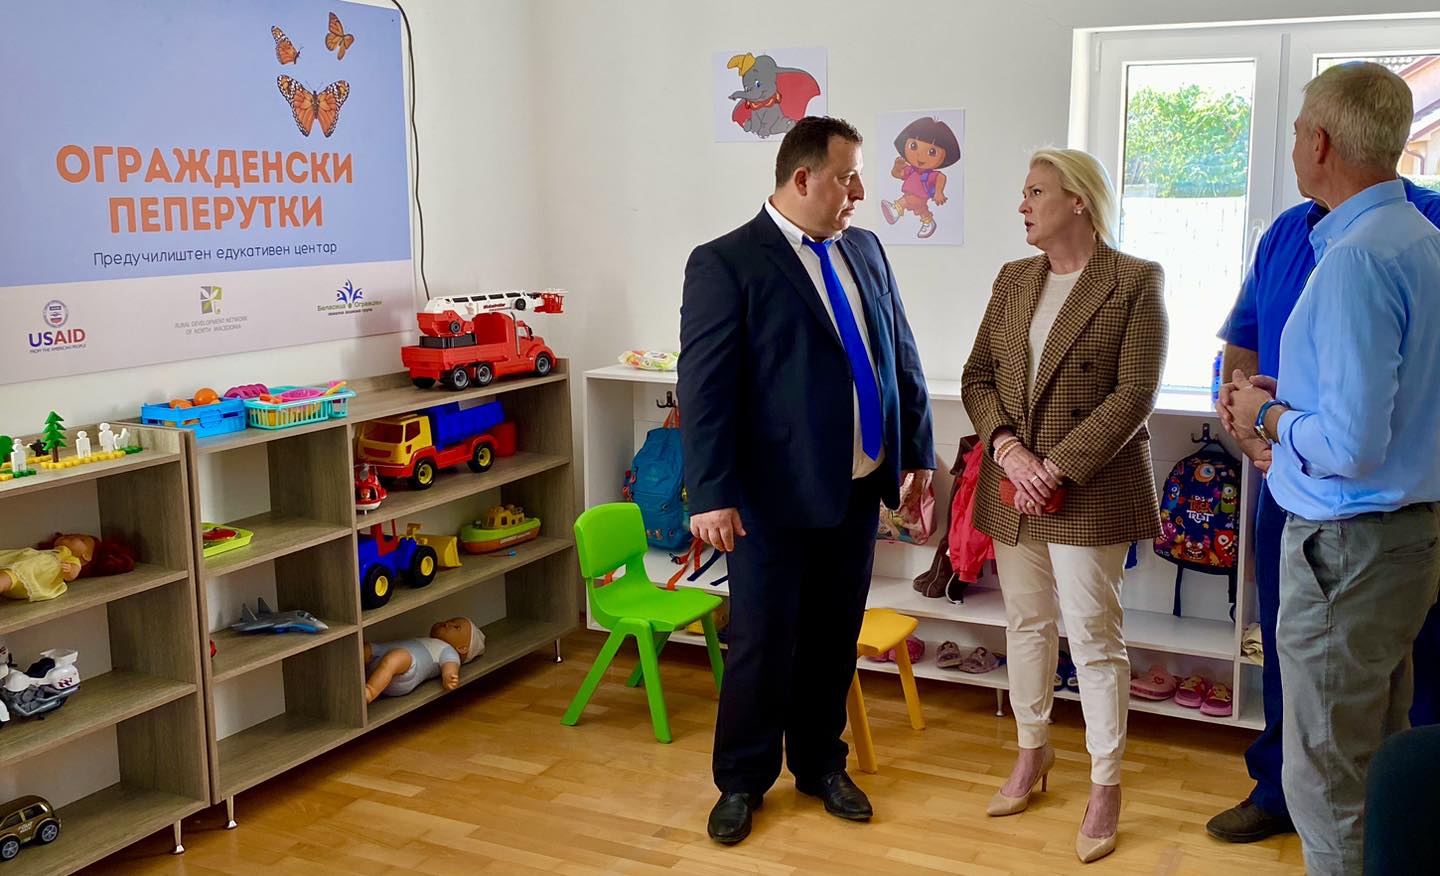 Opening of a new preschool educational center "Ograzden Butterflies" in Radovo village, Bosilovo municipality